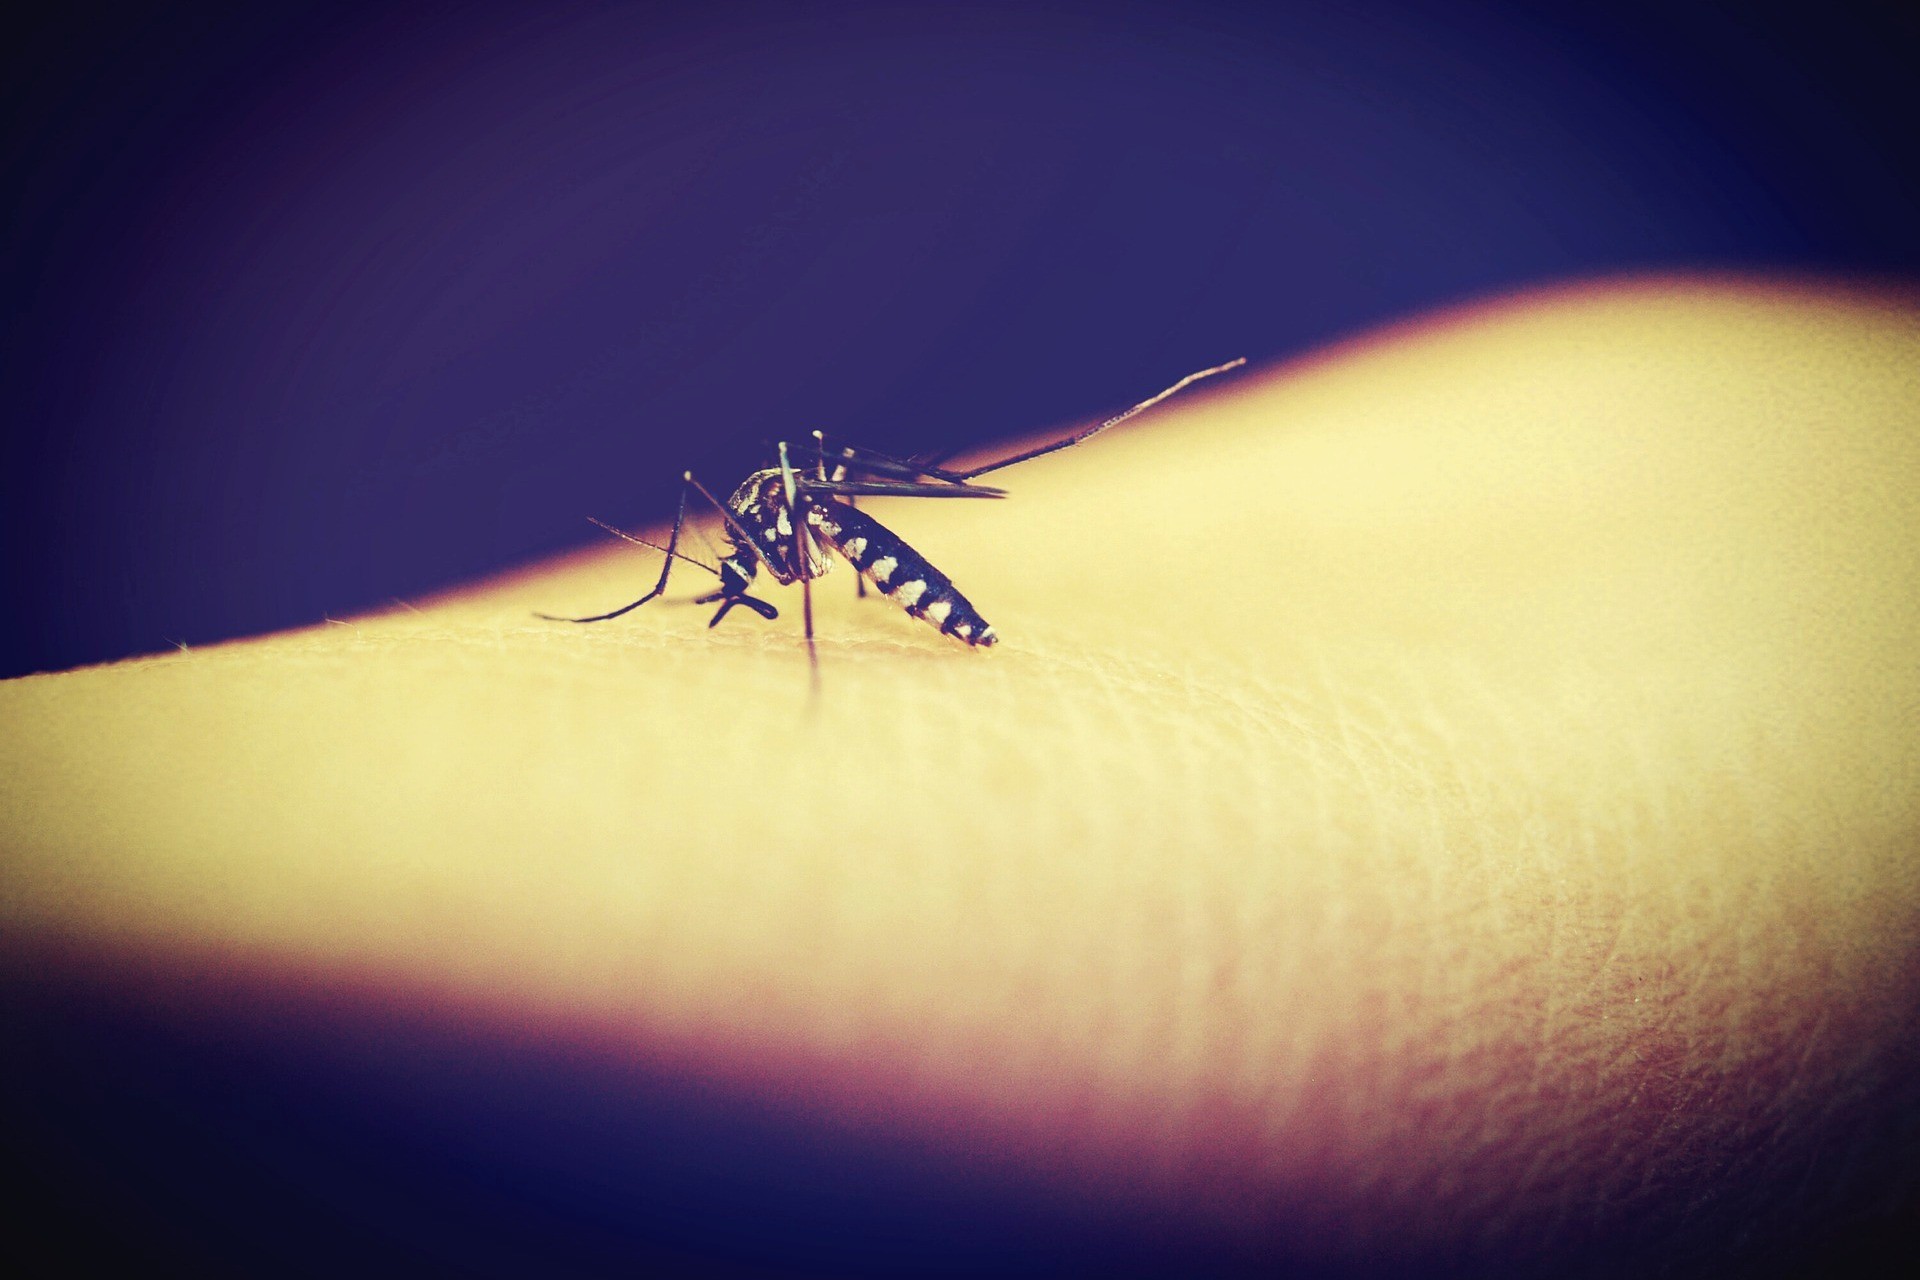 komar na skórze